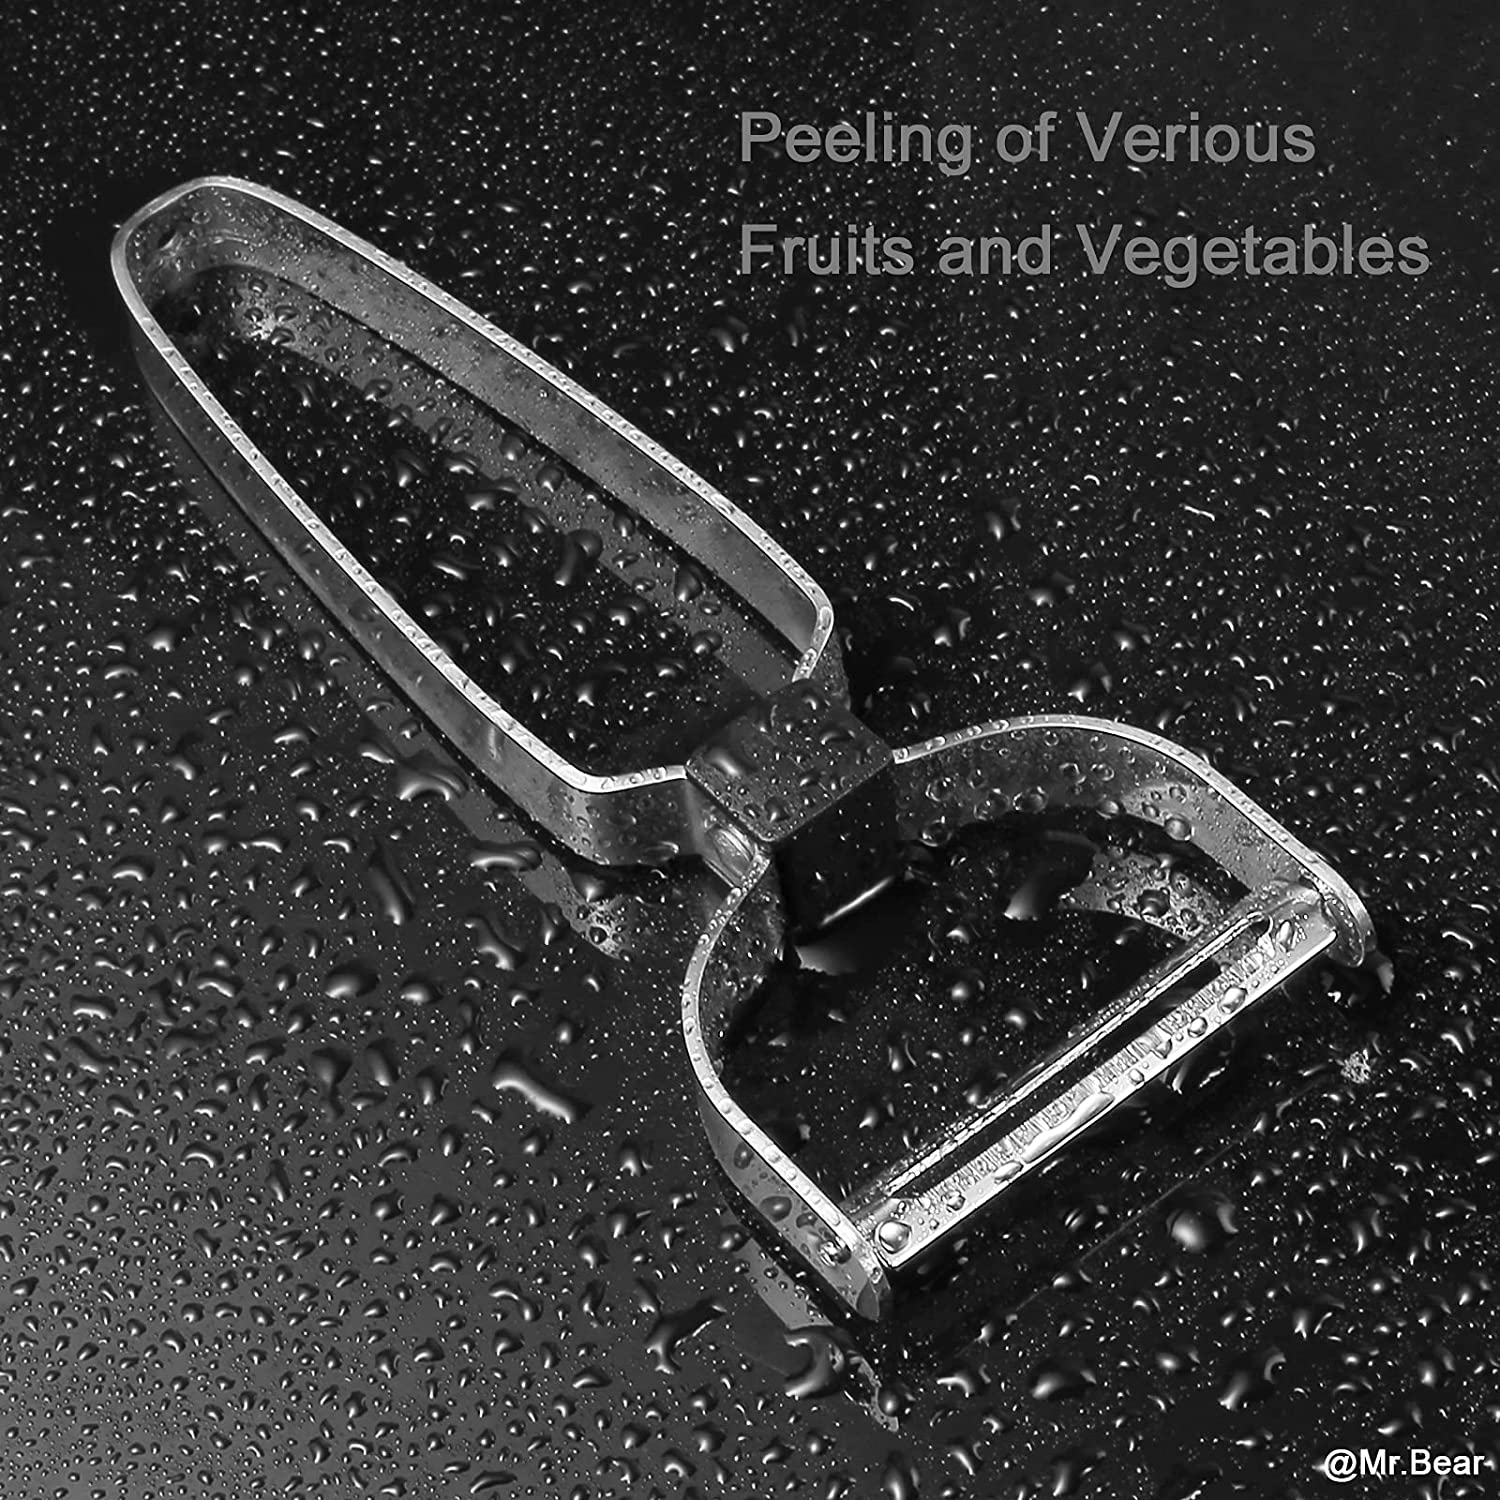 Mr.Bear Vegetable & Fruit Peeler Accessory for Kitchen, Y-Shaped Peelers for Potato, Carrot, Veggie, Fruit, Good Grip Stainless Steel Swivel with Ergonomic Non-Slip Handle, 1451.5Cm, (RICHI-001)